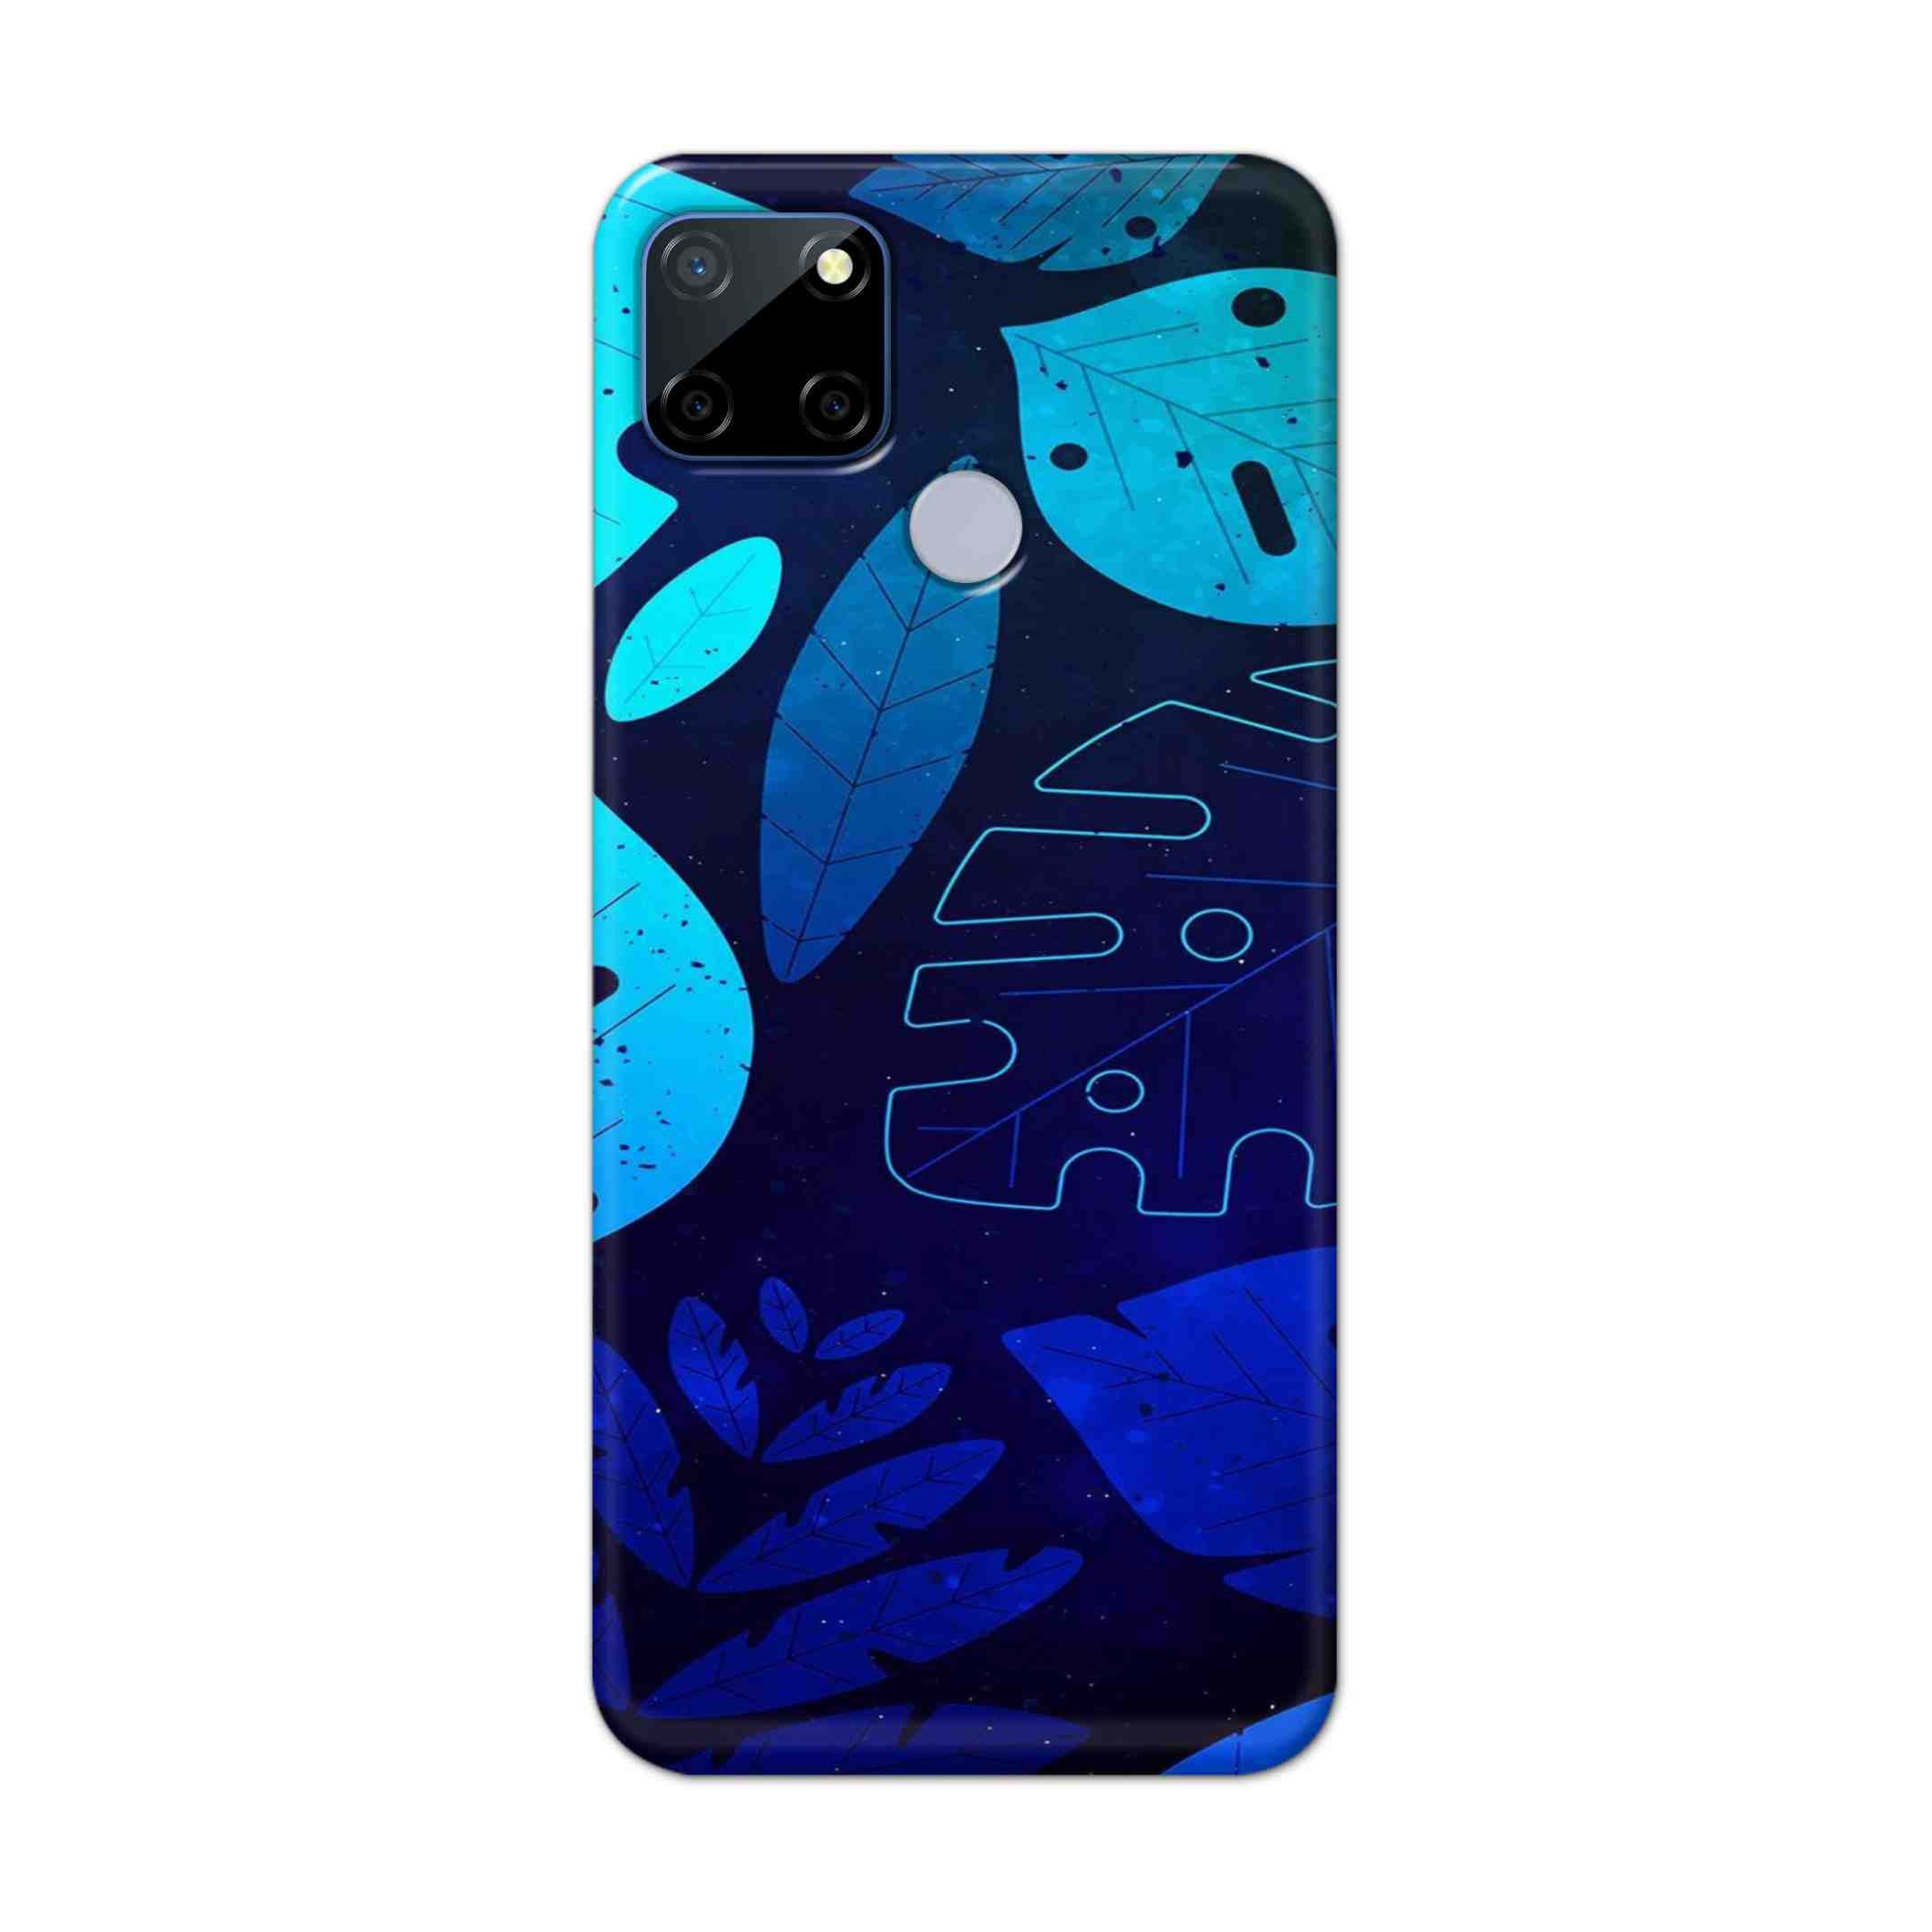 Buy Neon Leaf Hard Back Mobile Phone Case Cover For Realme C12 Online